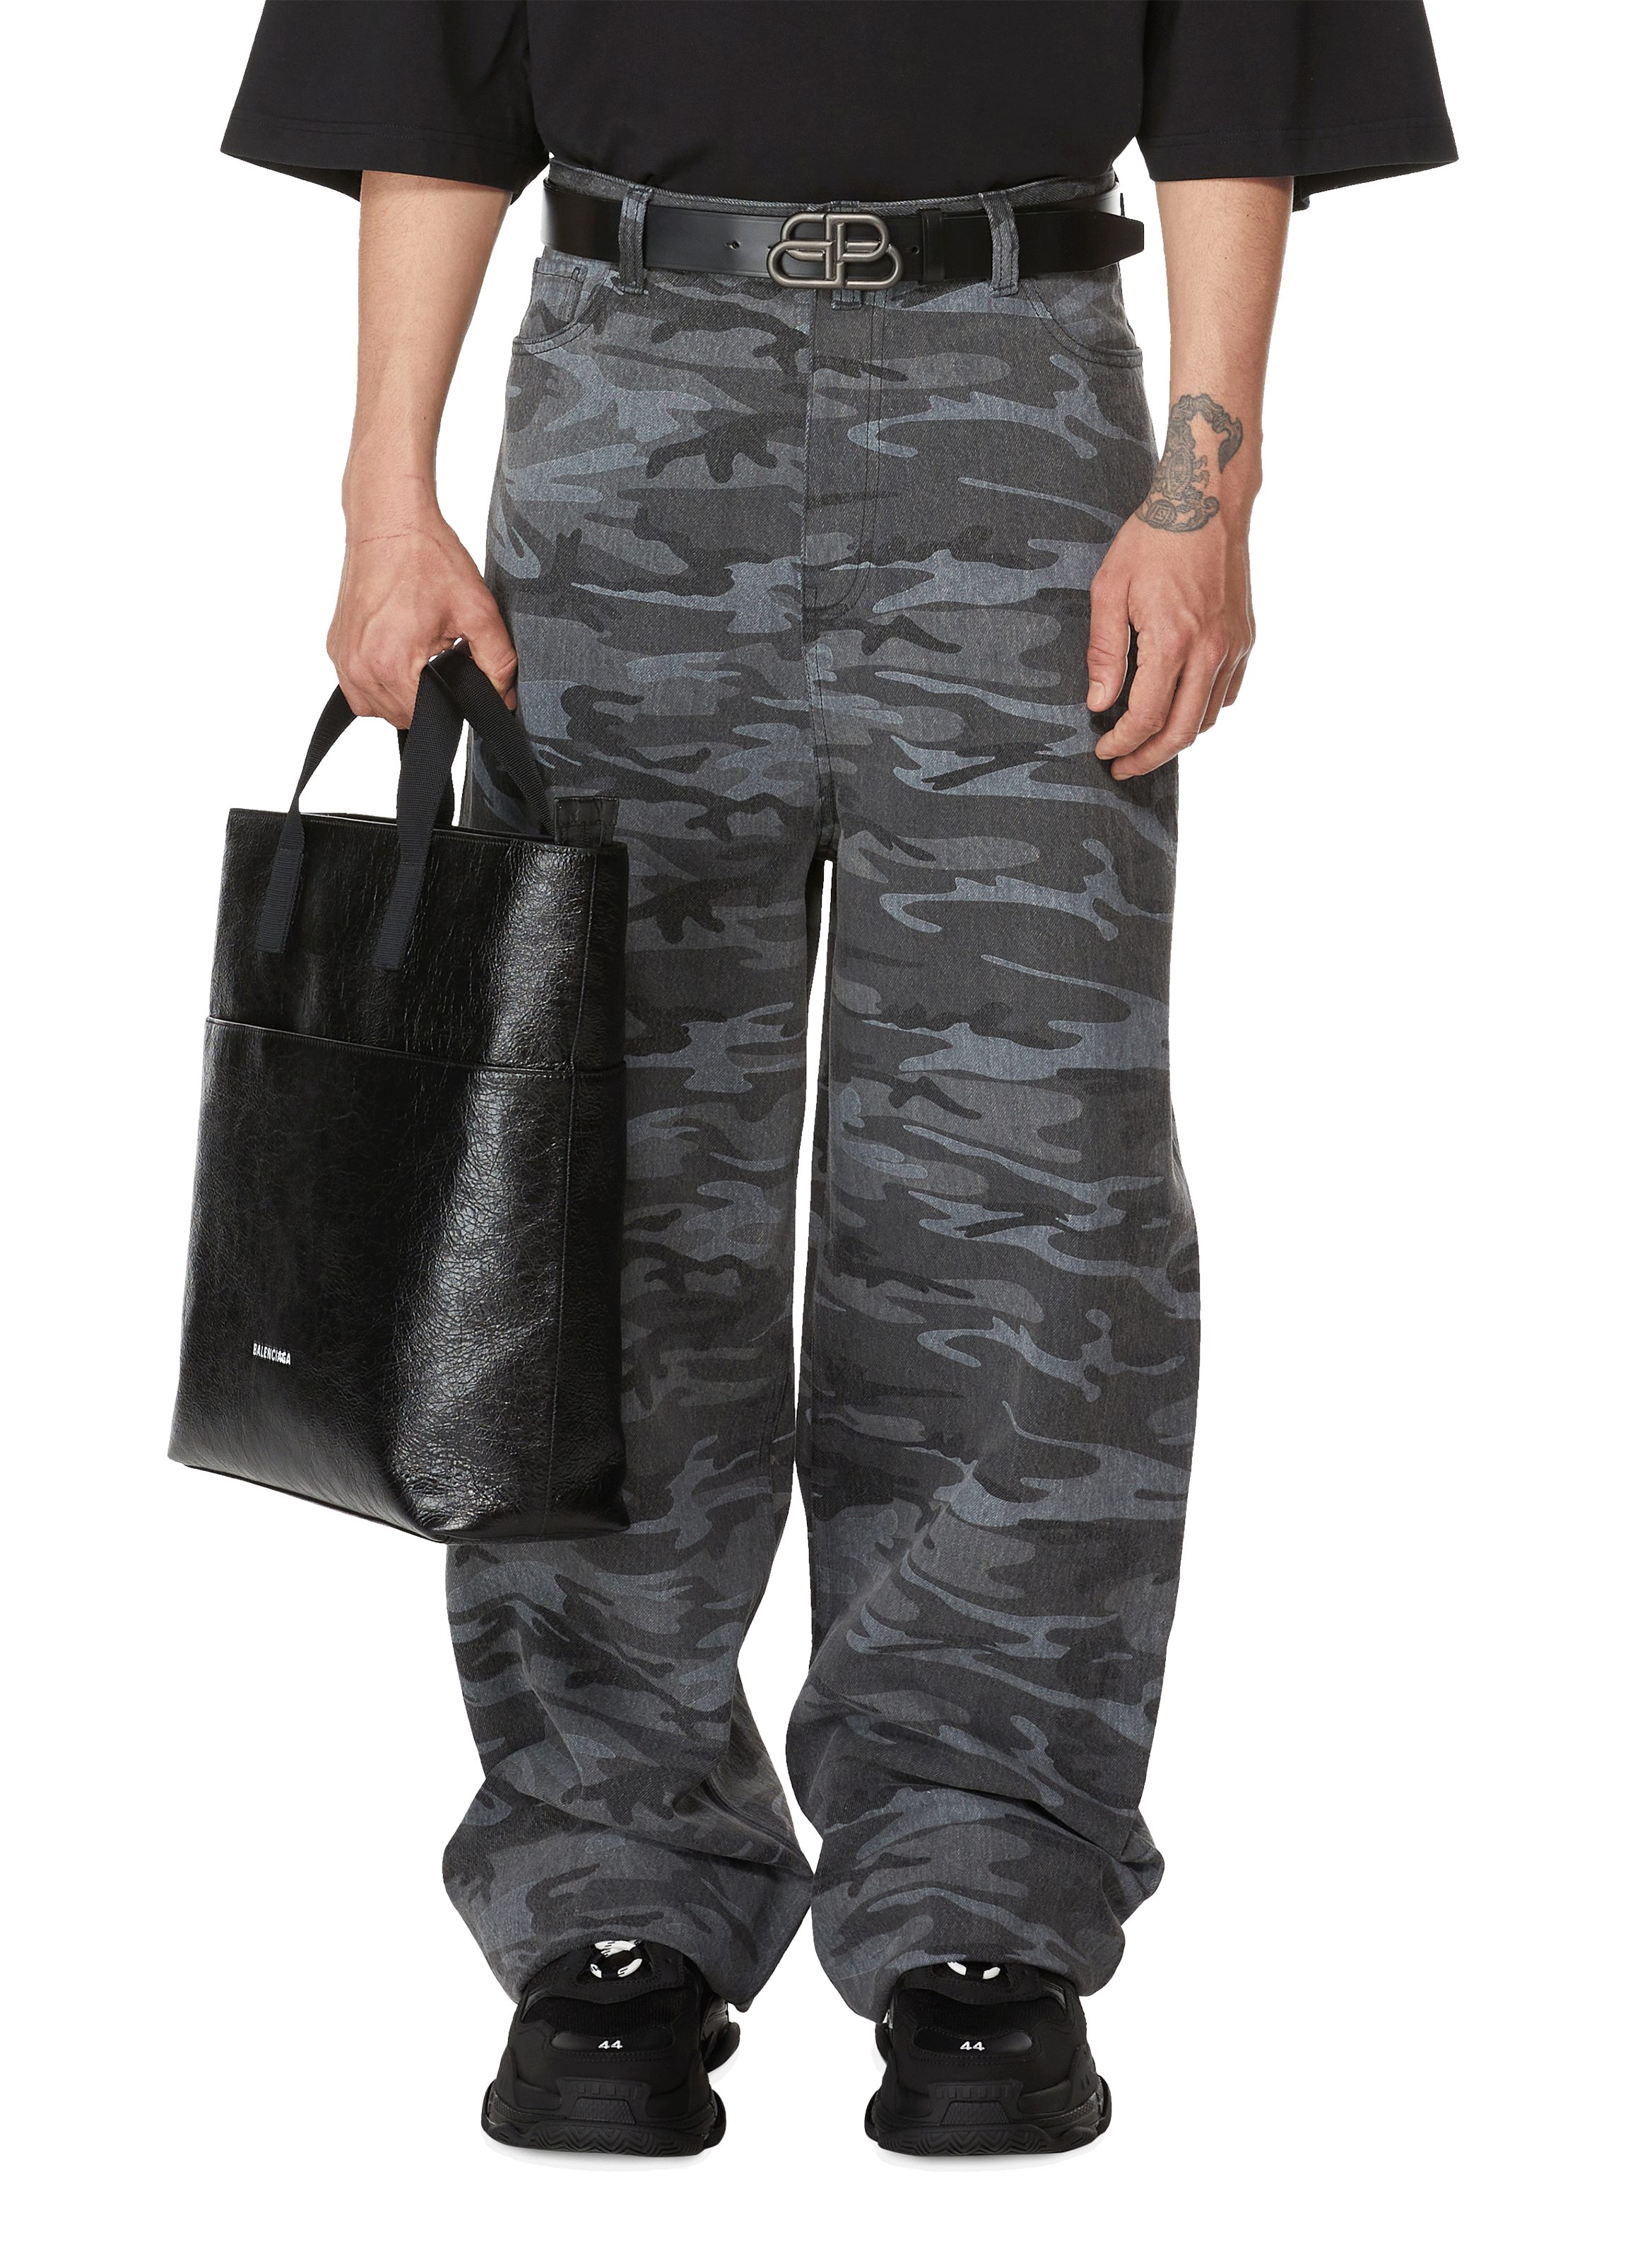 Eleluny Mens Camo Sports Cargo Pants Combat Trousers Baggy Casual Gym  Bottoms BlackWhite 2XL  Walmartcom